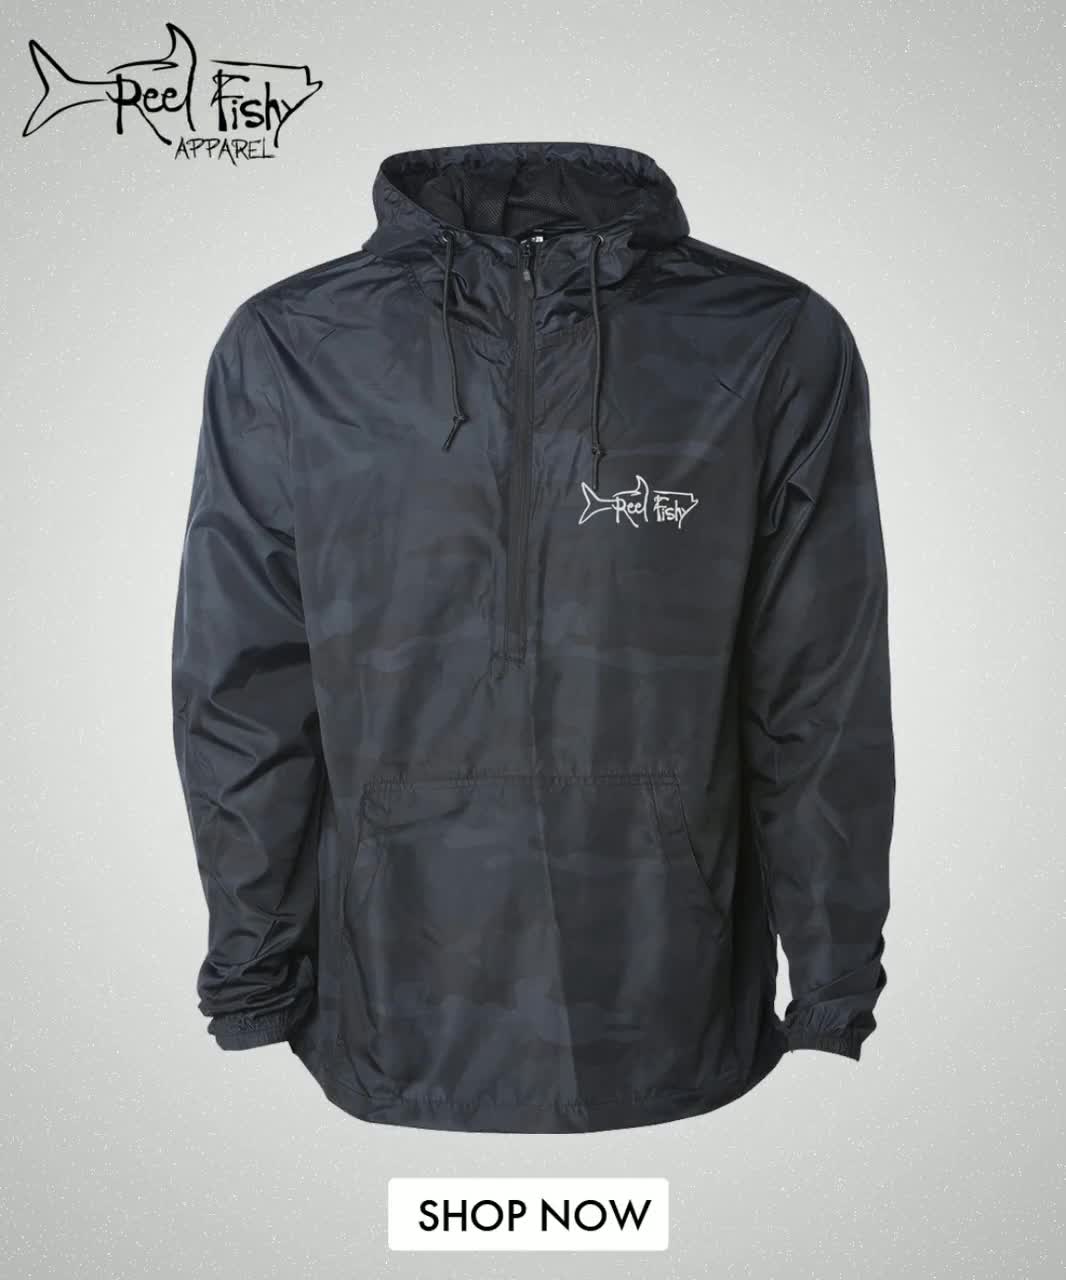 Windbreaker Lightweight Jacket, Hooded Full Zip, Pullover Wind & Water  Resistant Jacket, Fishing Jacket, Rain Jacket reel Fishy Apparel -   Canada